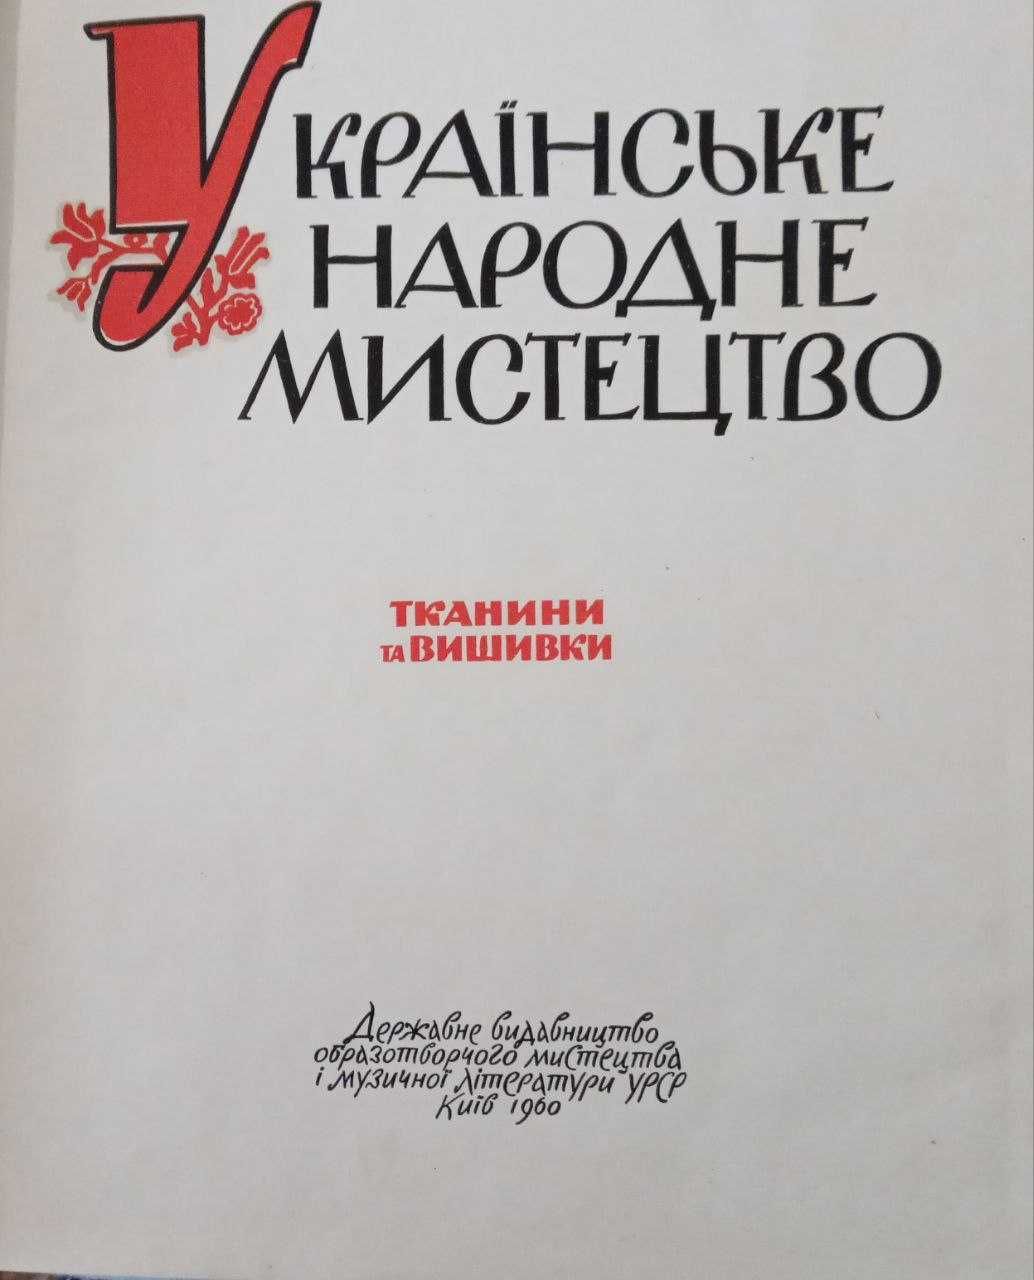 Книга вишивка тканини "Українське народне мистецтво.Тканини і вишивки"